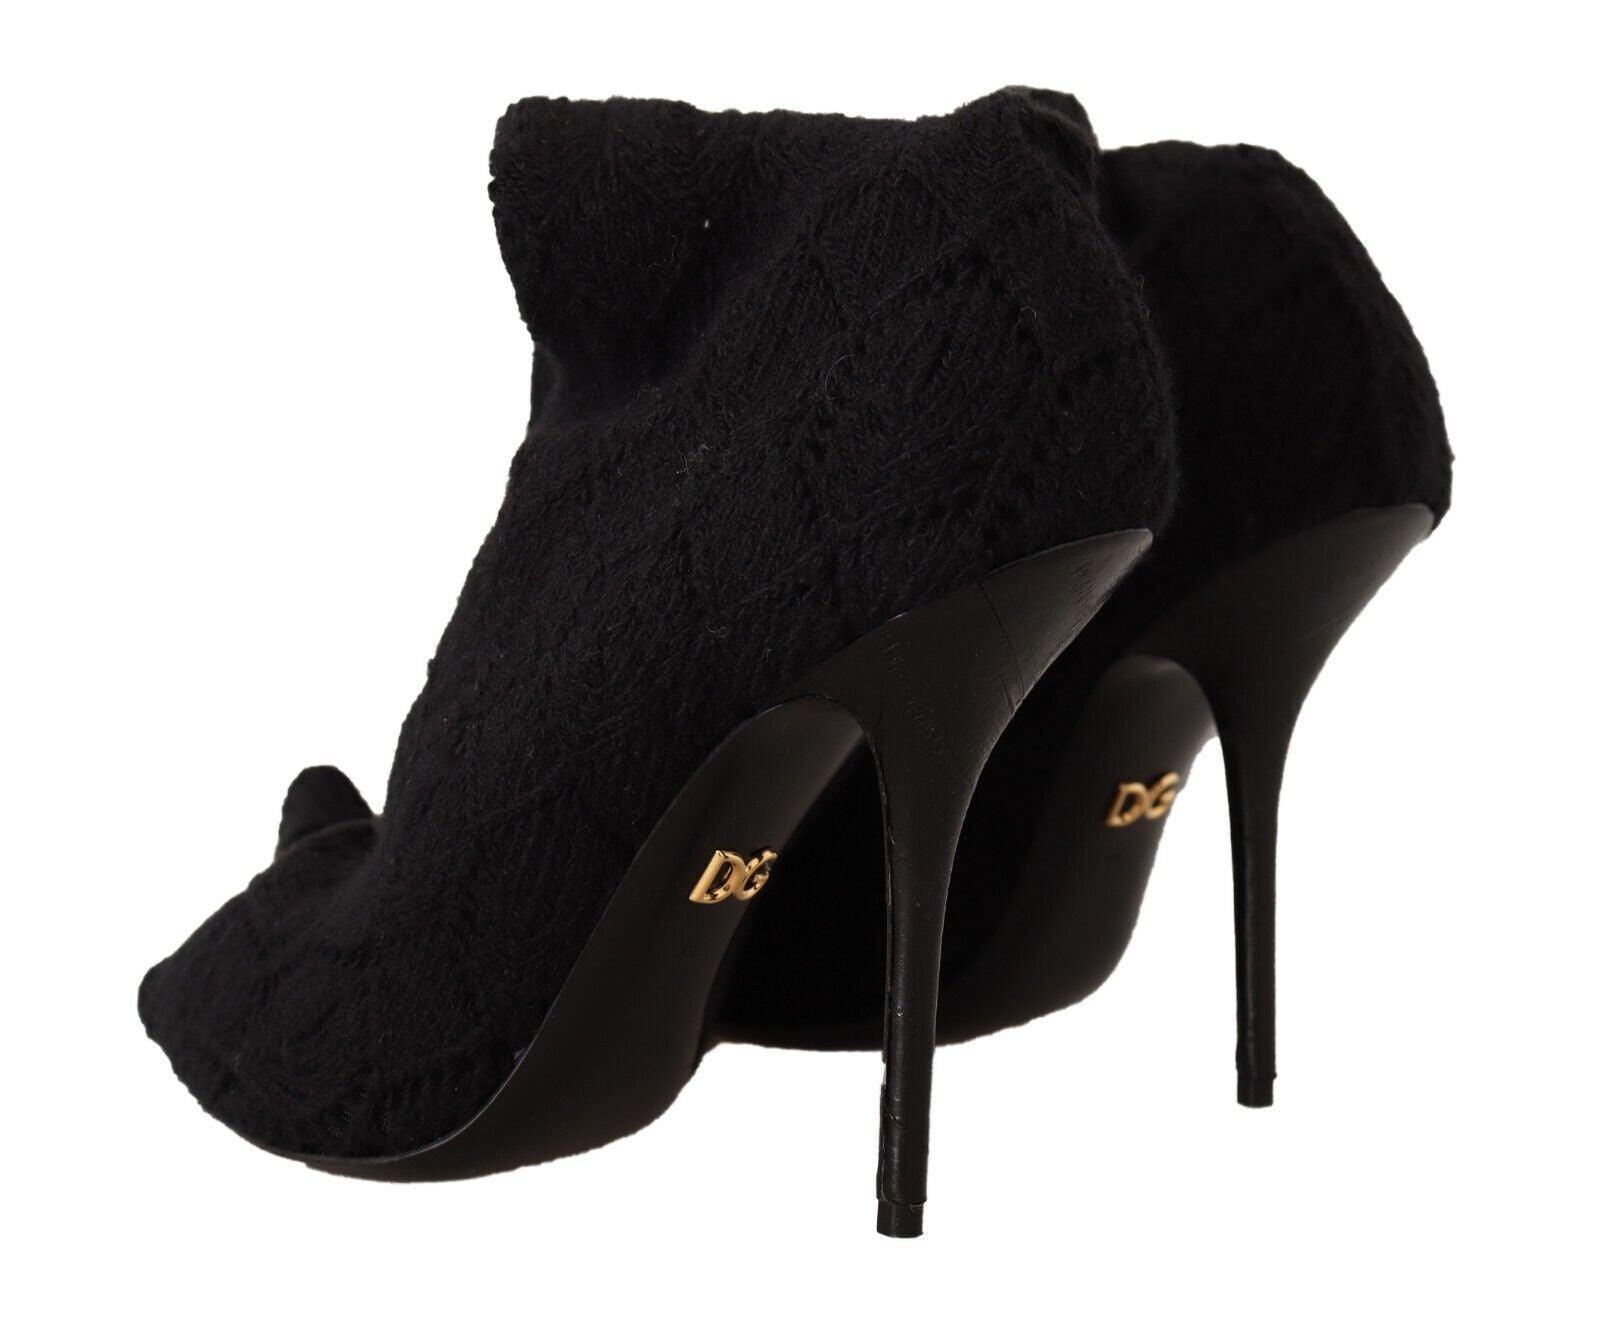 Dolce & Gabbana Elegant Black Stretch Socks Boots - PER.FASHION